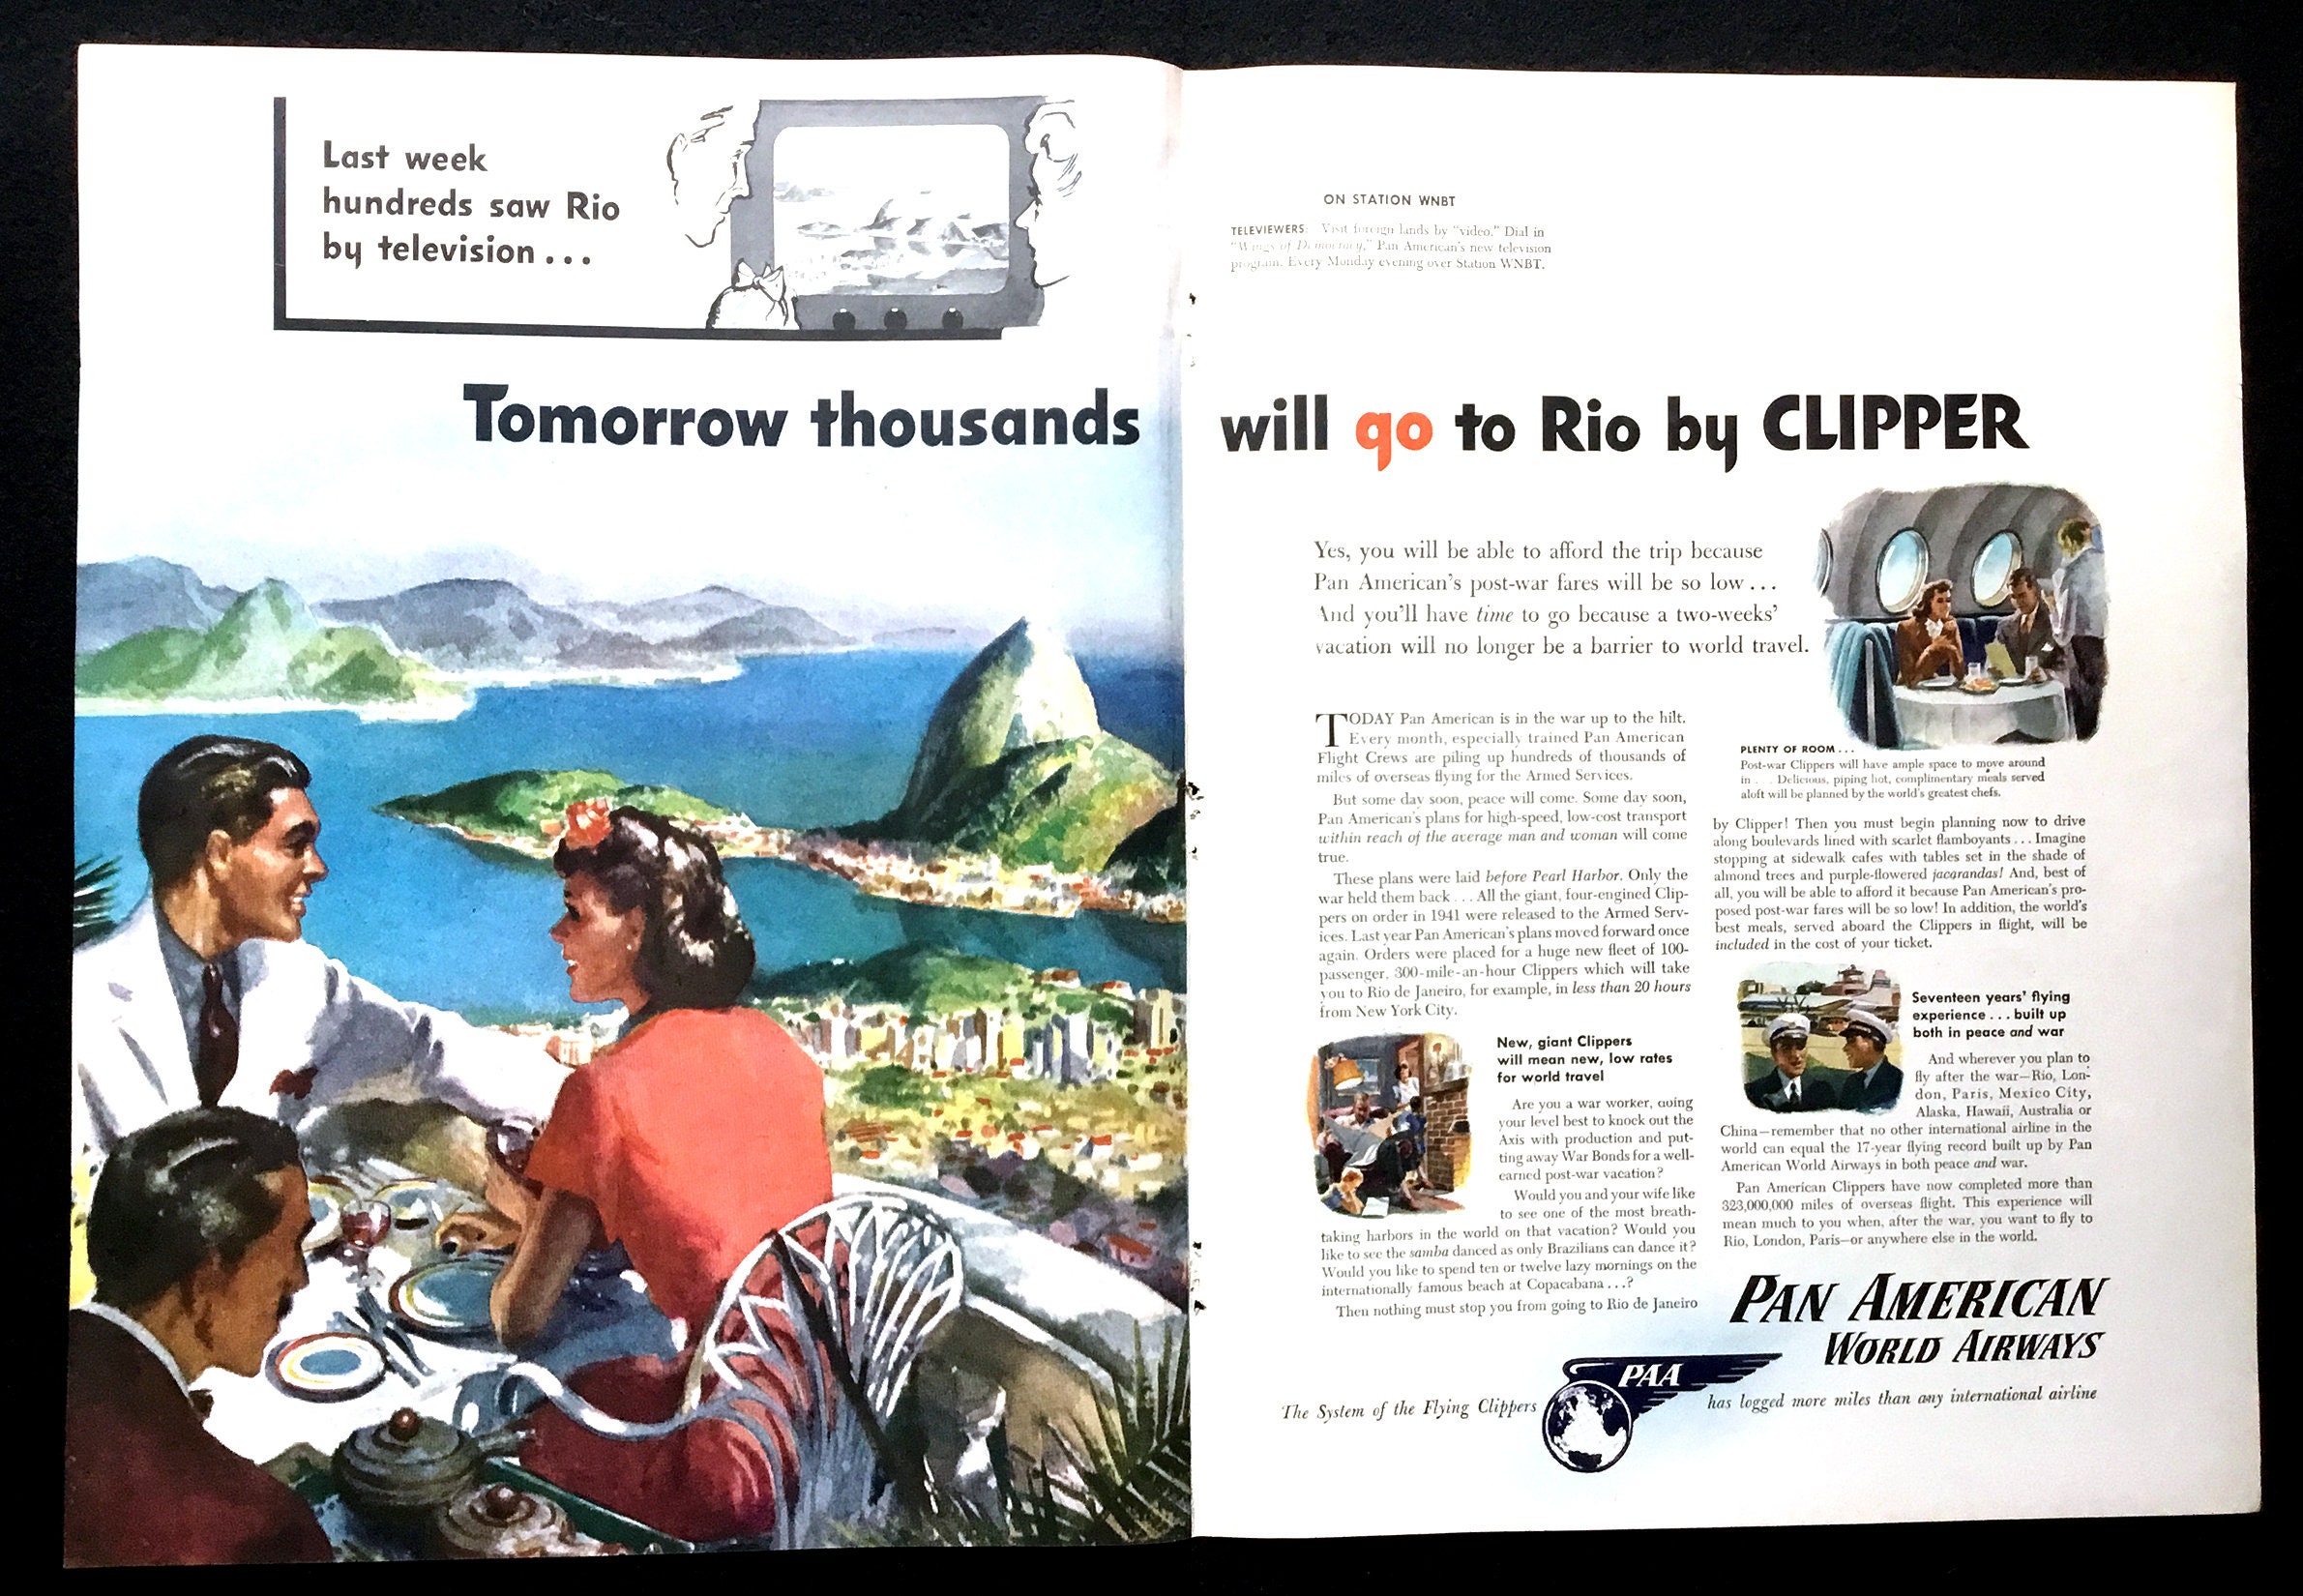 Clipper In-Flight Magazine